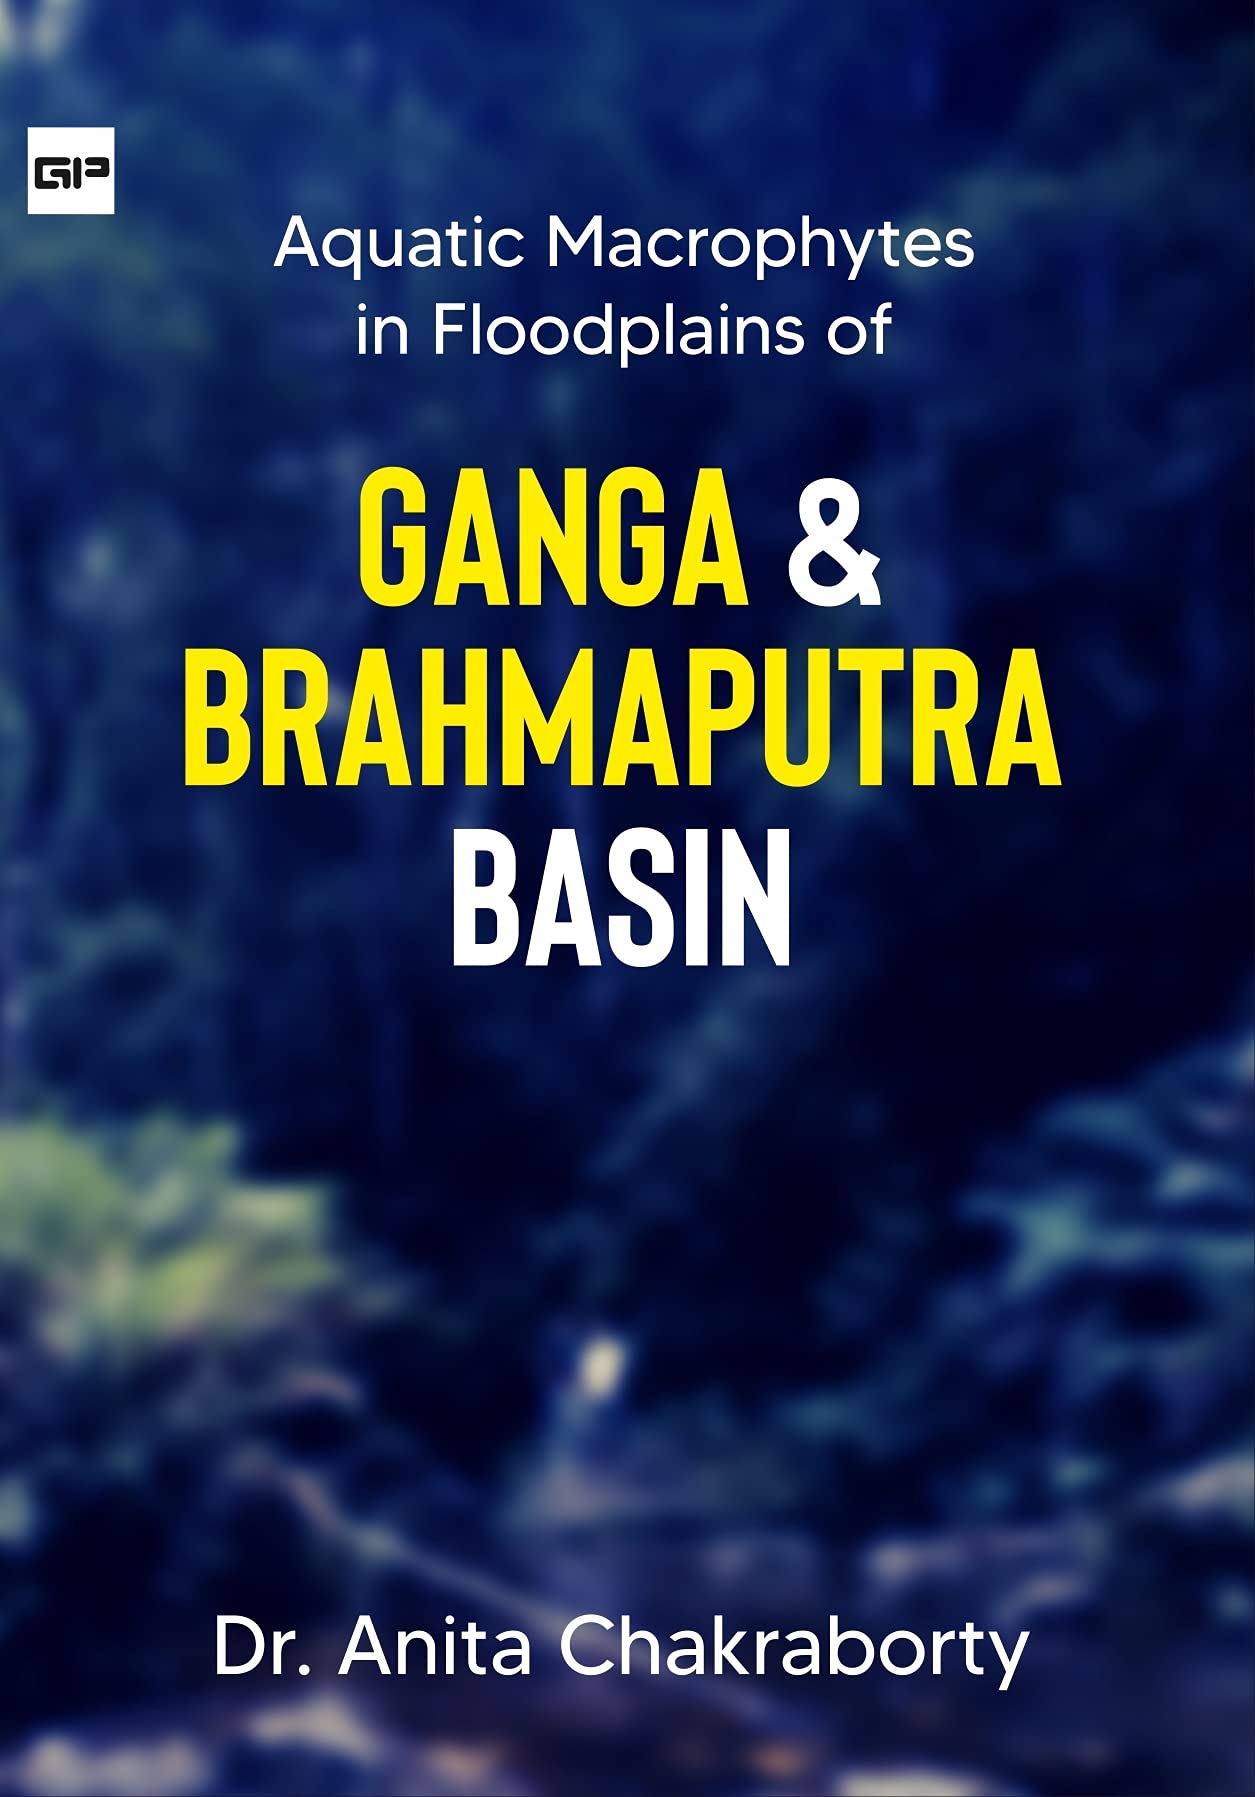 Aquatic macrophytes in floodplains of Ganga and Brahmaputra Basin